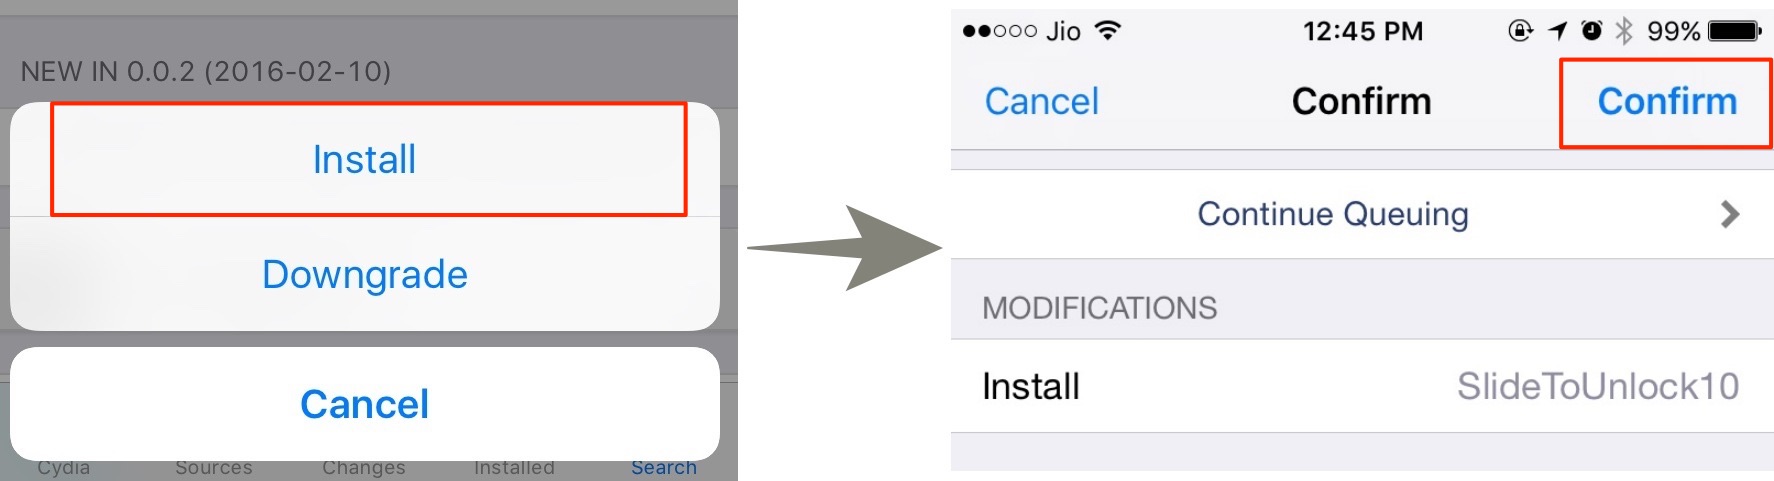 Bring_back_slide_to_unlock_iOS10_3-1